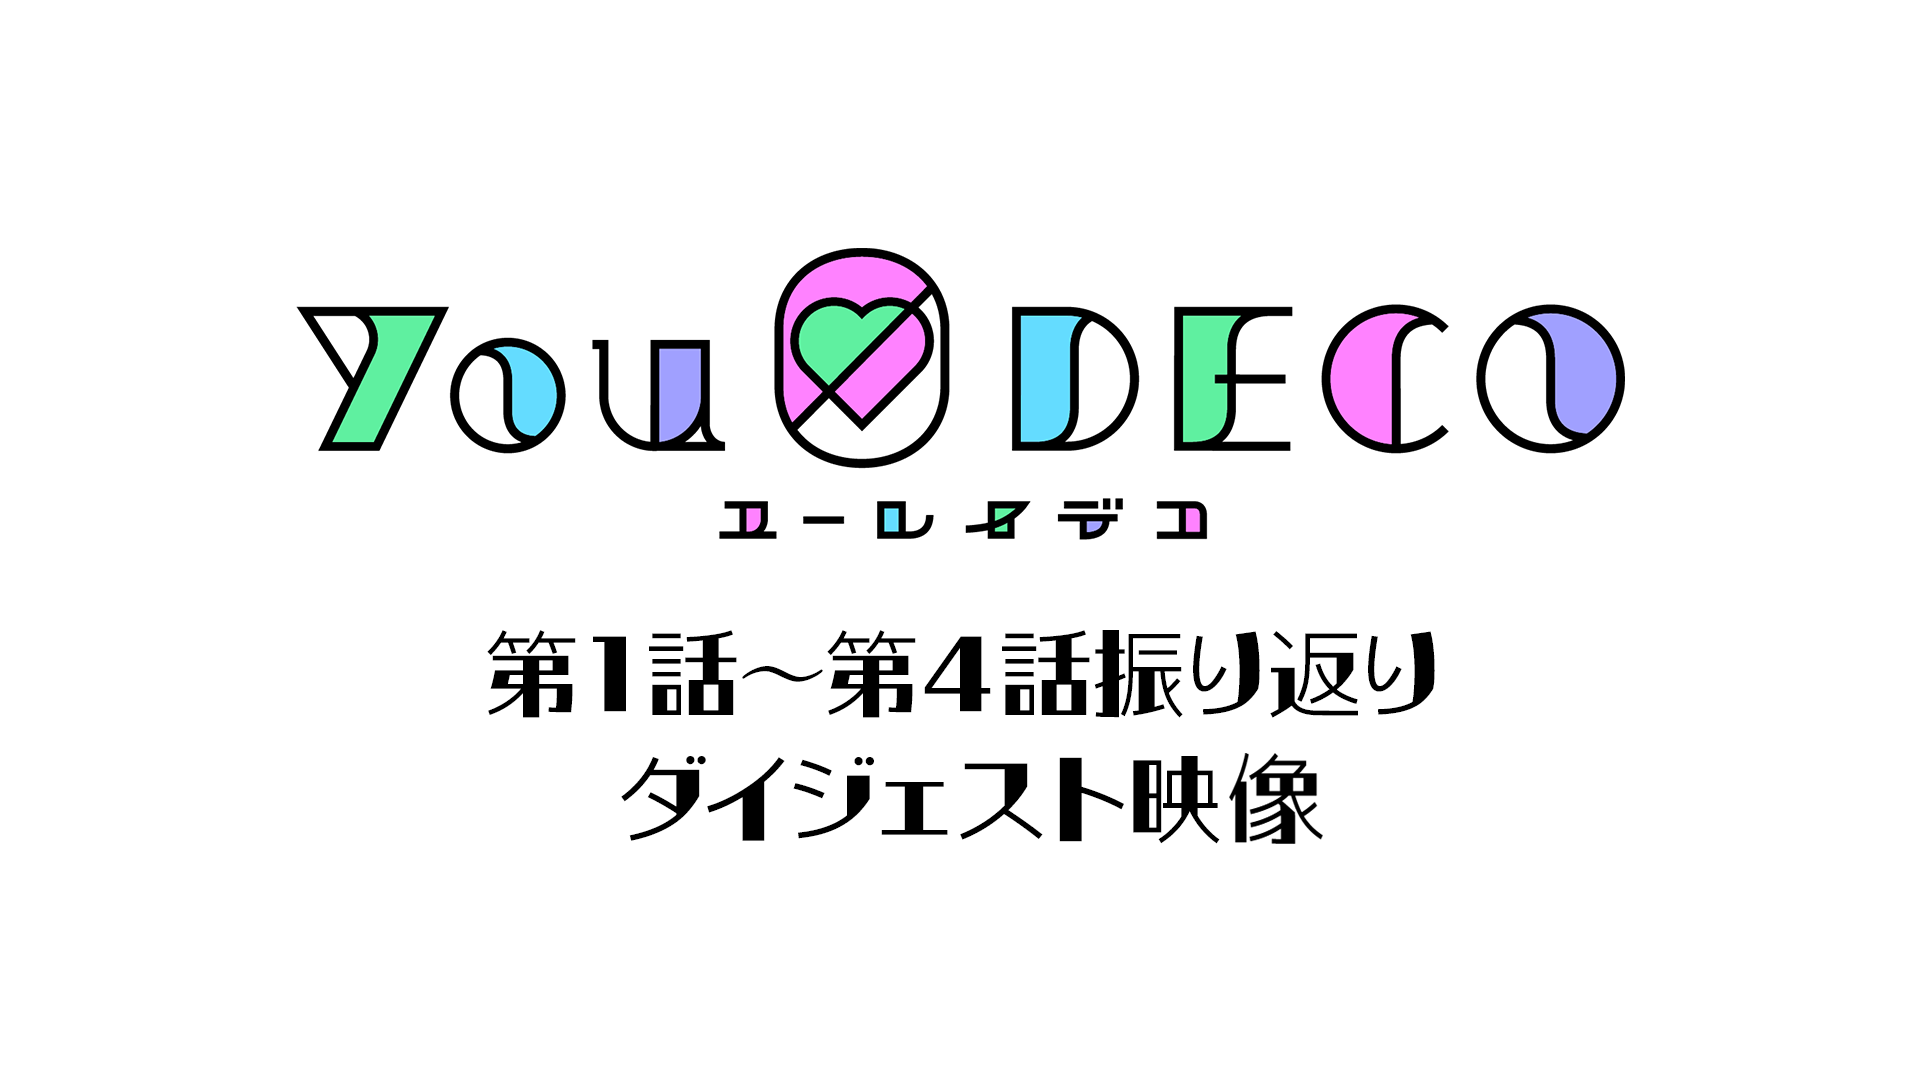 Yurei Deco - Wikipedia